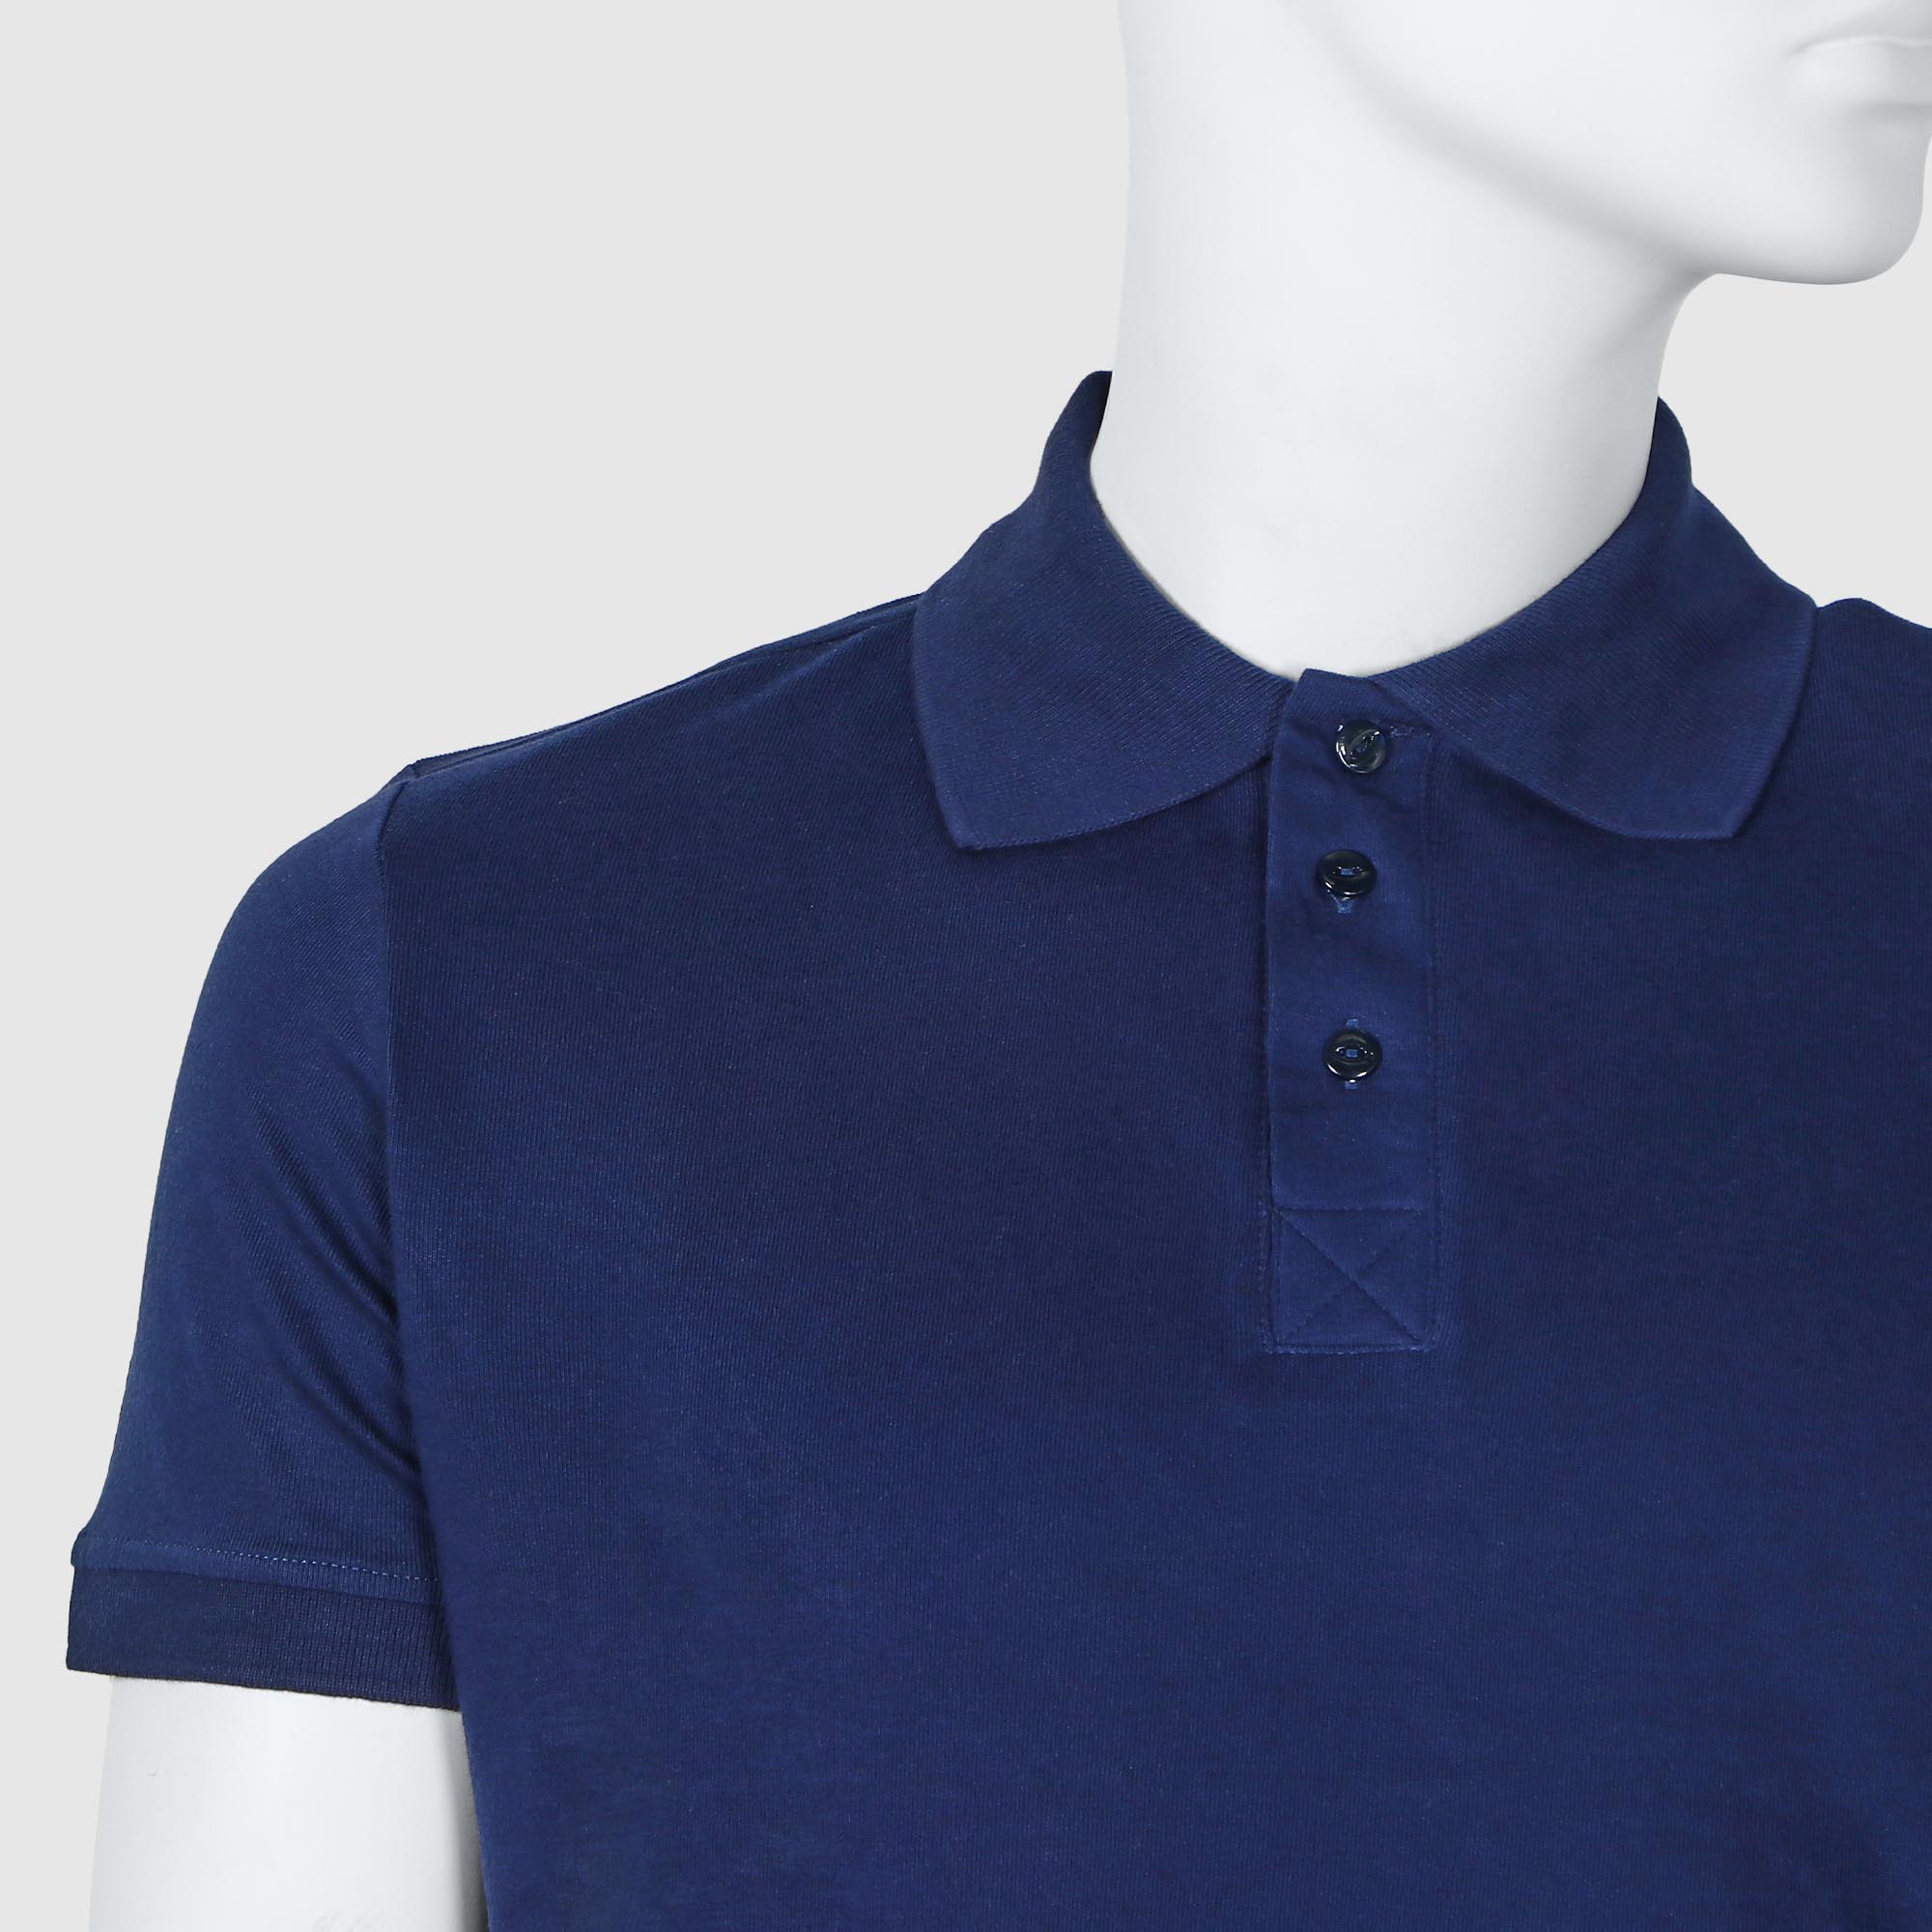 Мужская футболка-поло Diva Teks синяя (DTD-10), цвет синий, размер 54-56 - фото 3